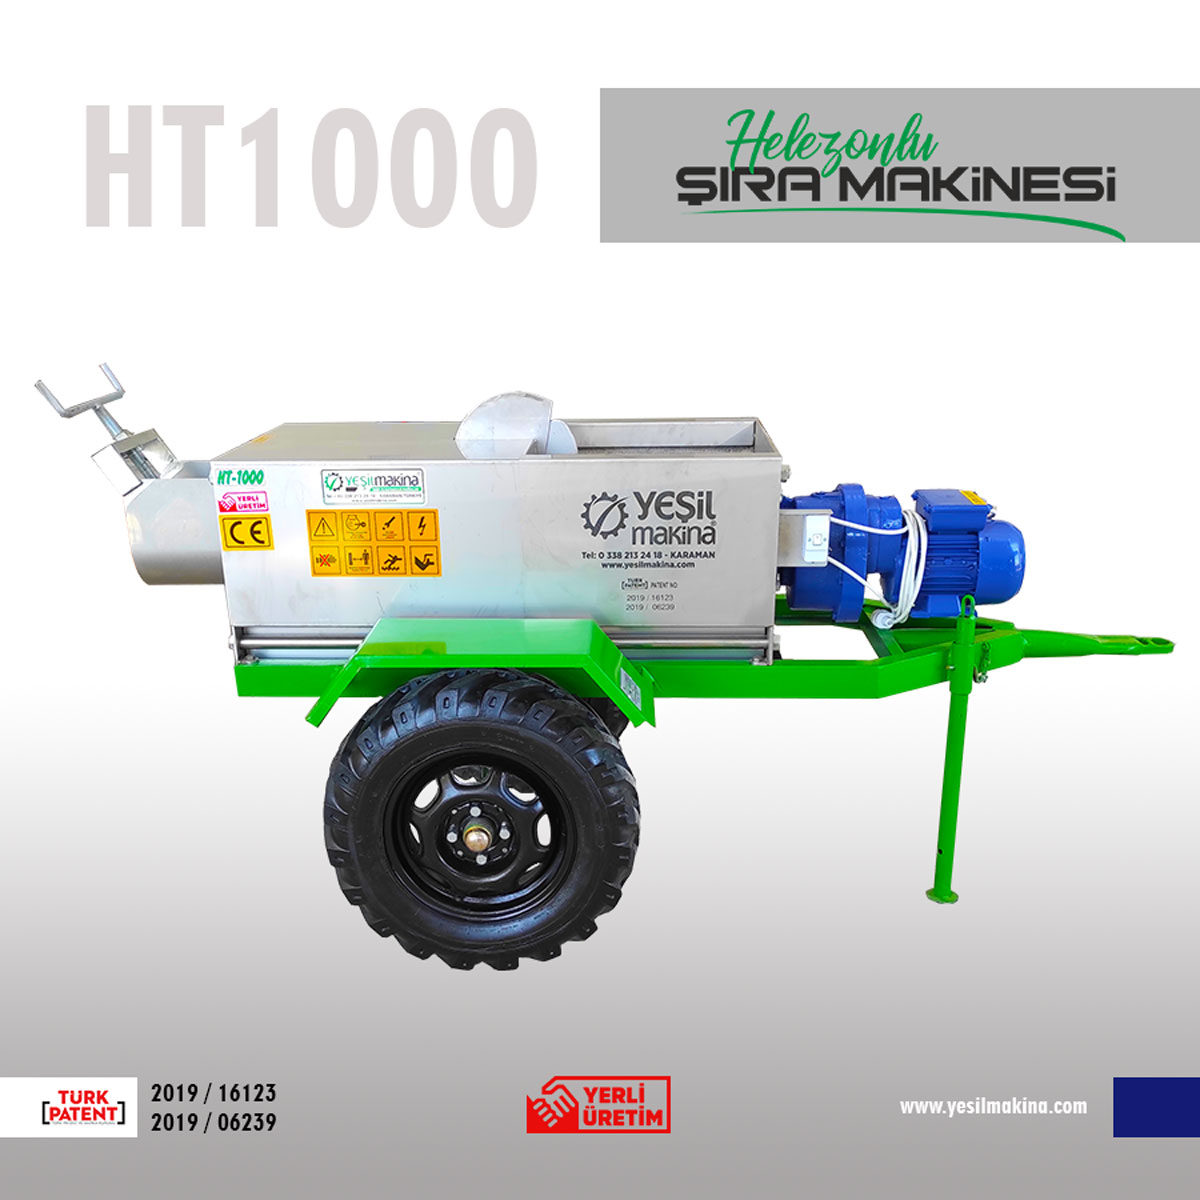 ht1000-yeni-2